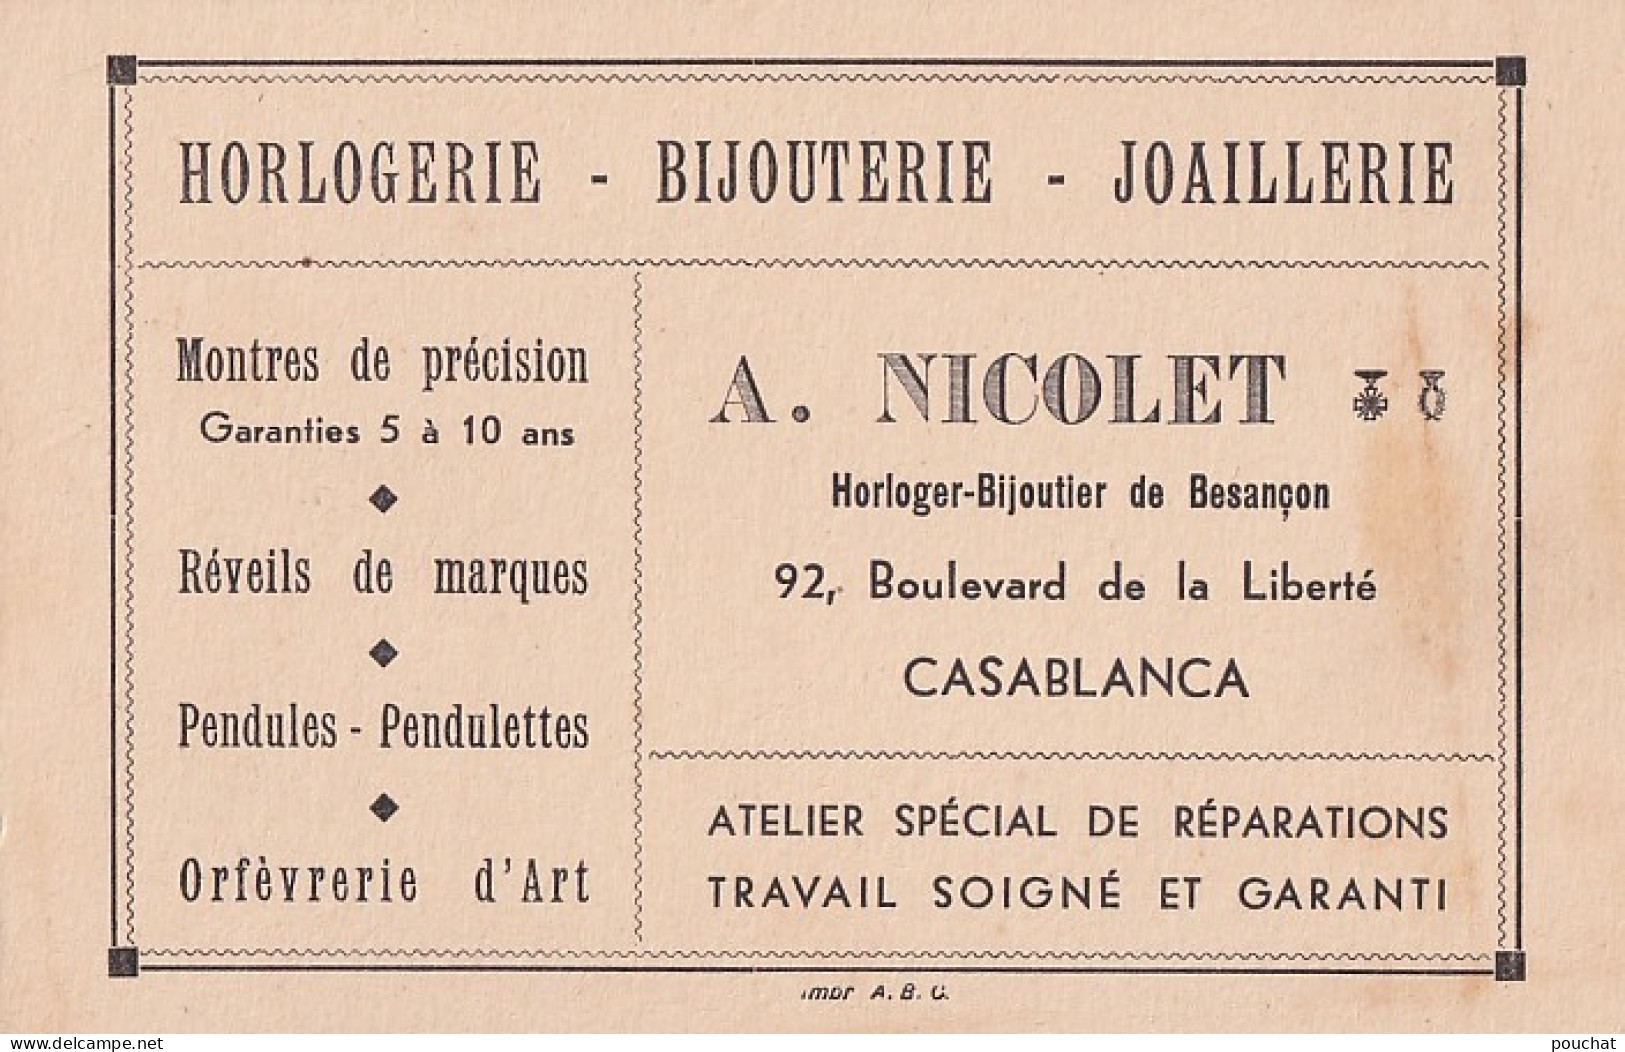   CASABLANCA - A. NICOLET - HORLOGERIE - BIJOUTERIE - JOAILLERIE - 92 , BOULEVARD DE LA LIBERTE - Visiting Cards